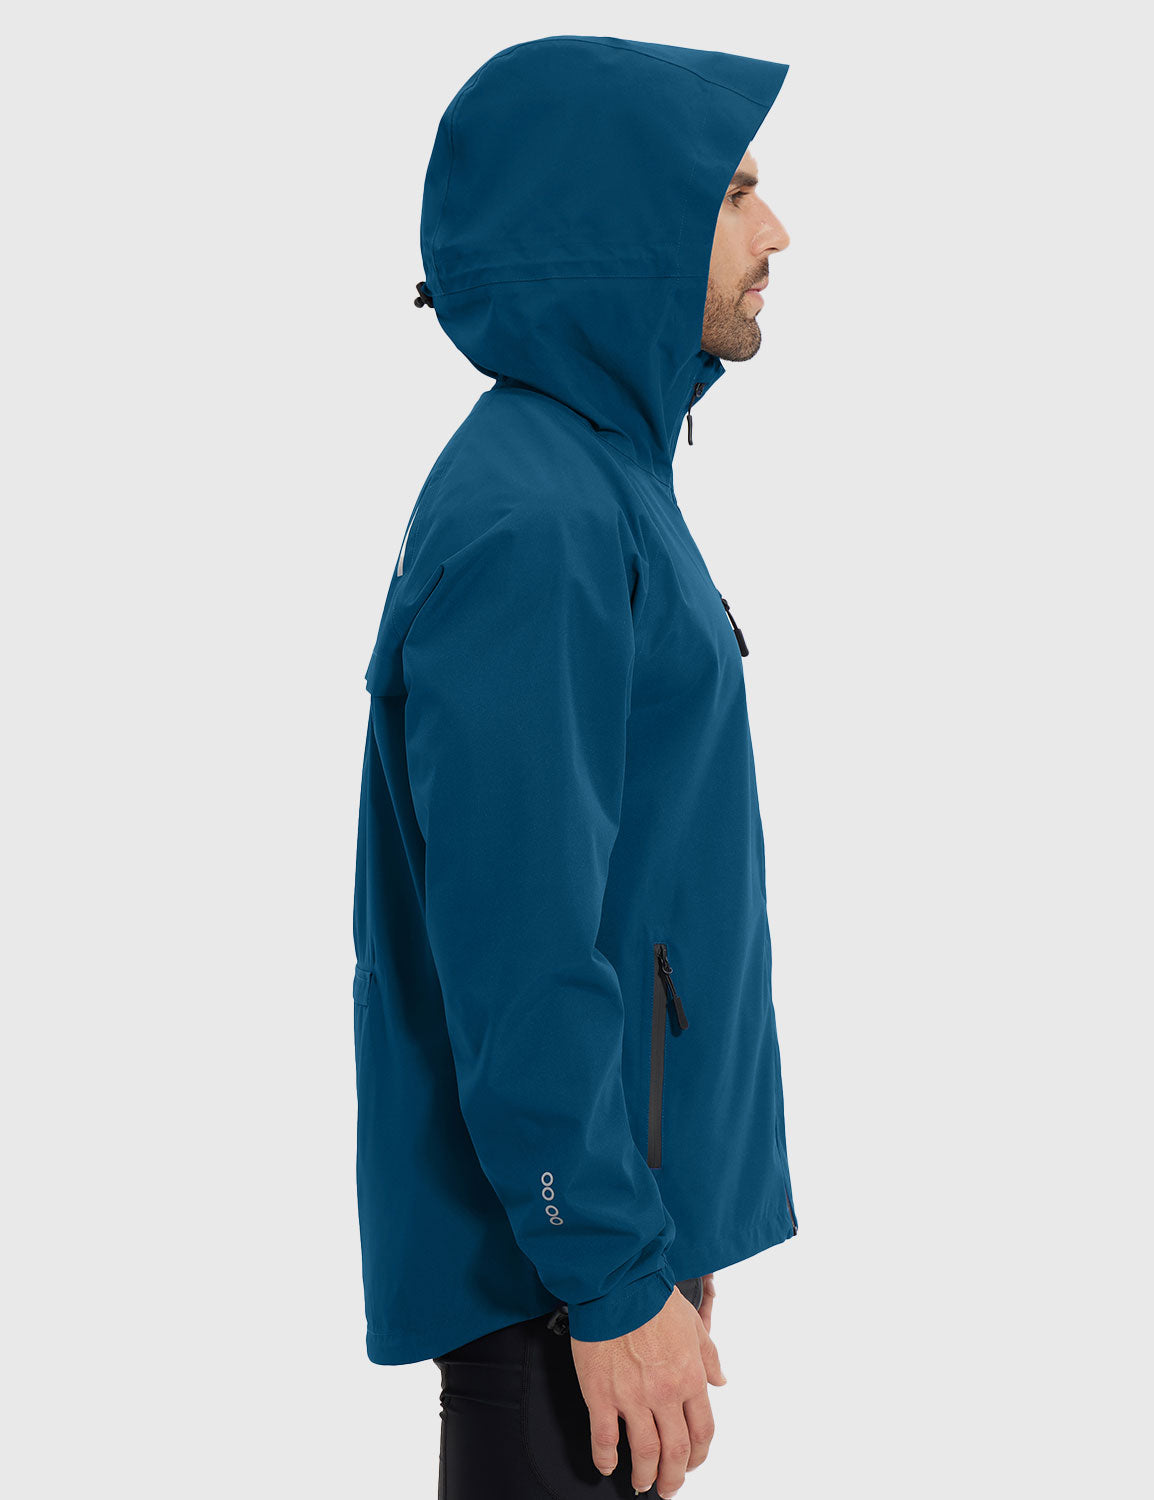 Baleaf Men's Breathable Waterproof Hooded Jacket Gibraltar Sea Side